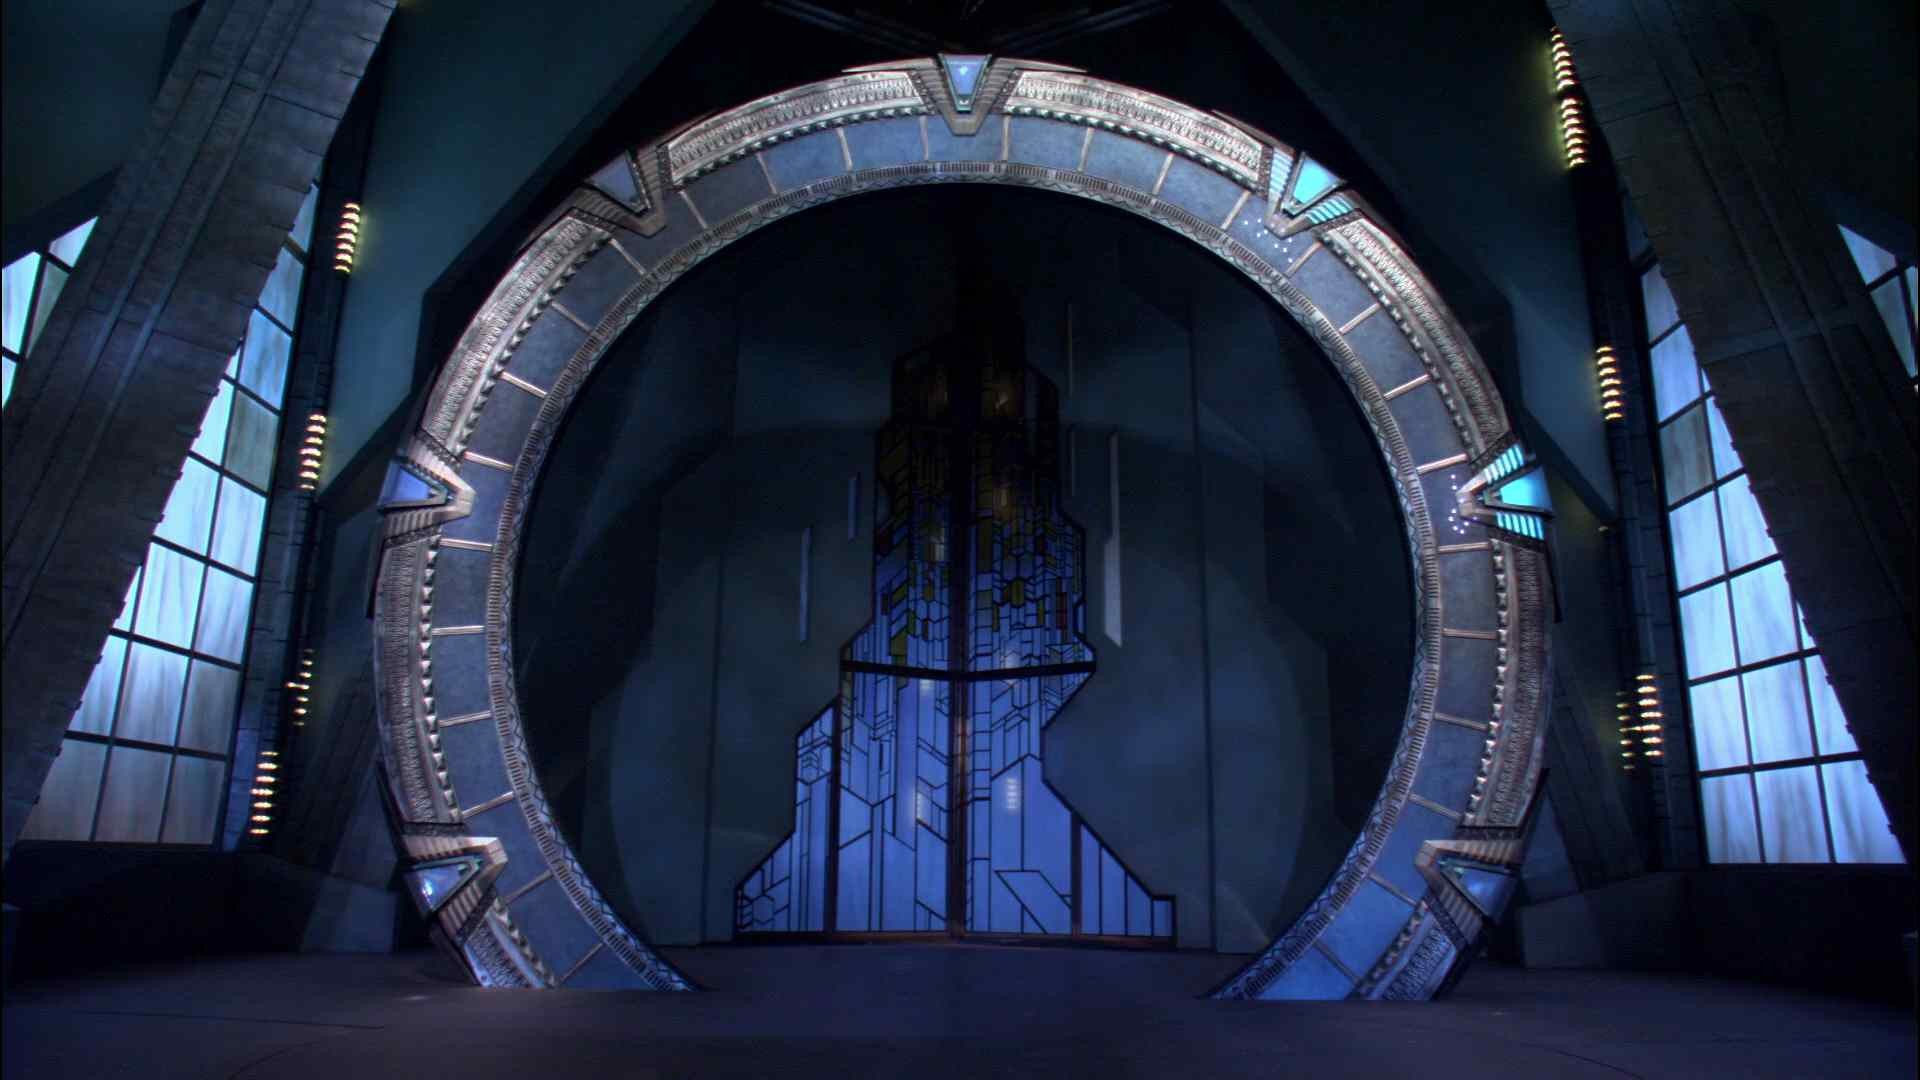 1920x1080 Stargate: Atlantis images Stargate atlantis HD wallpaper and back...